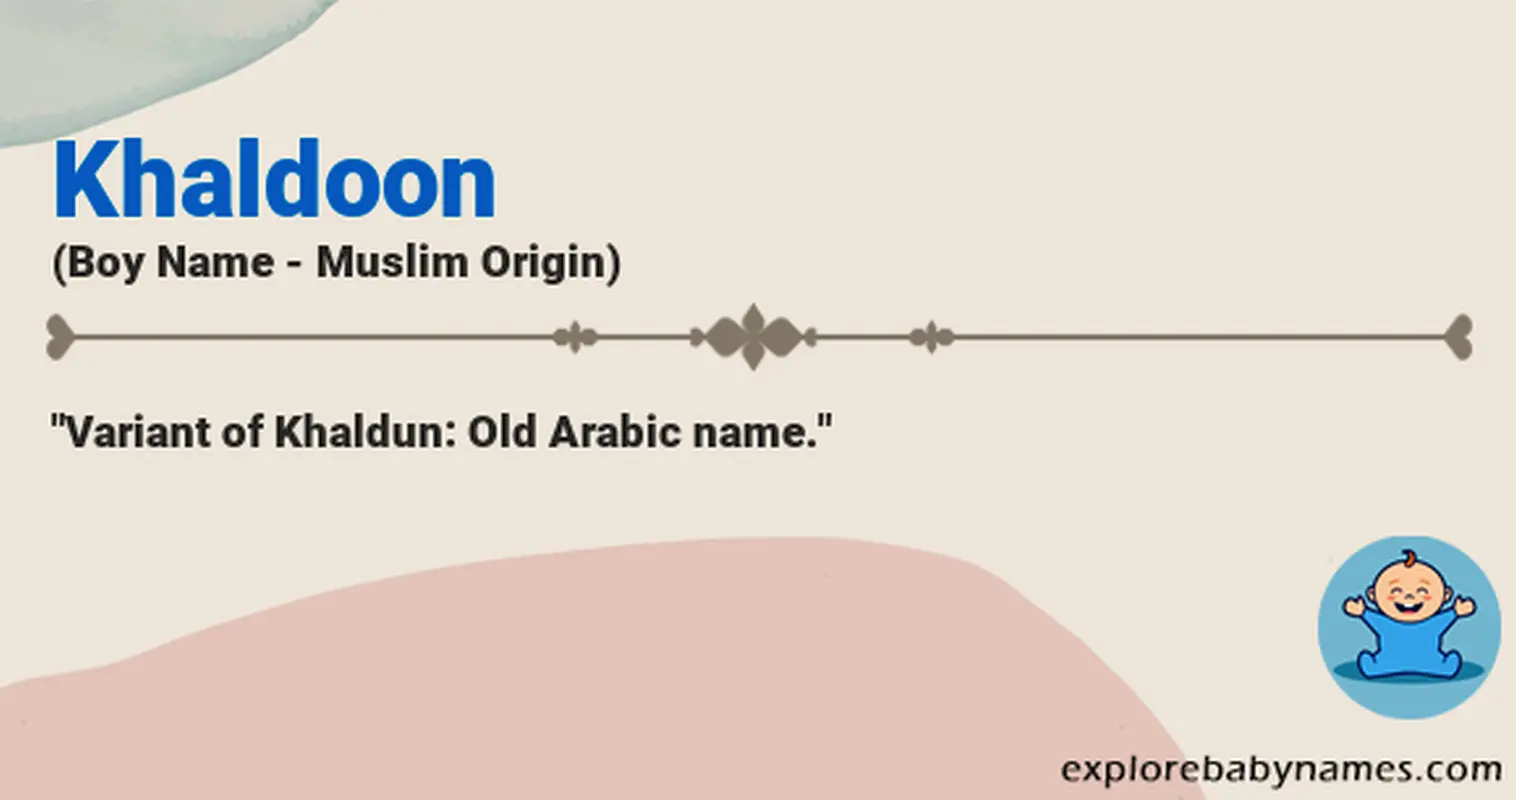 Meaning of Khaldoon